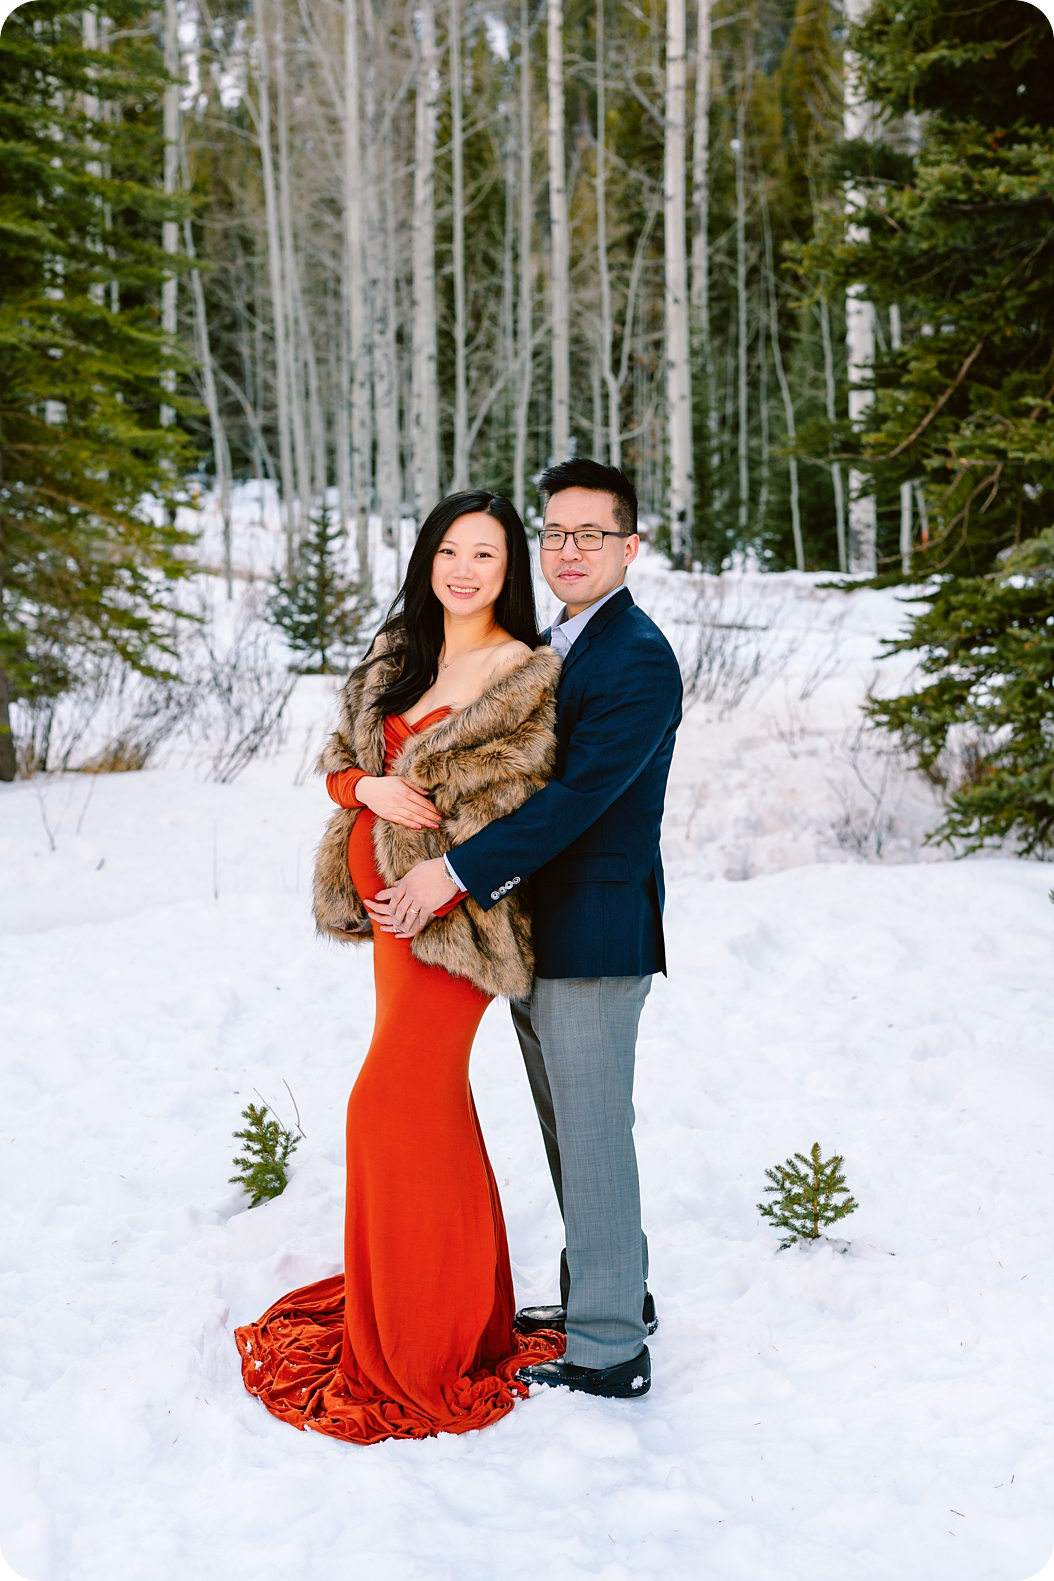 Winter Maternity Portraits in the Snow | {Beka Price Photography | Utah Maternity Photographer}